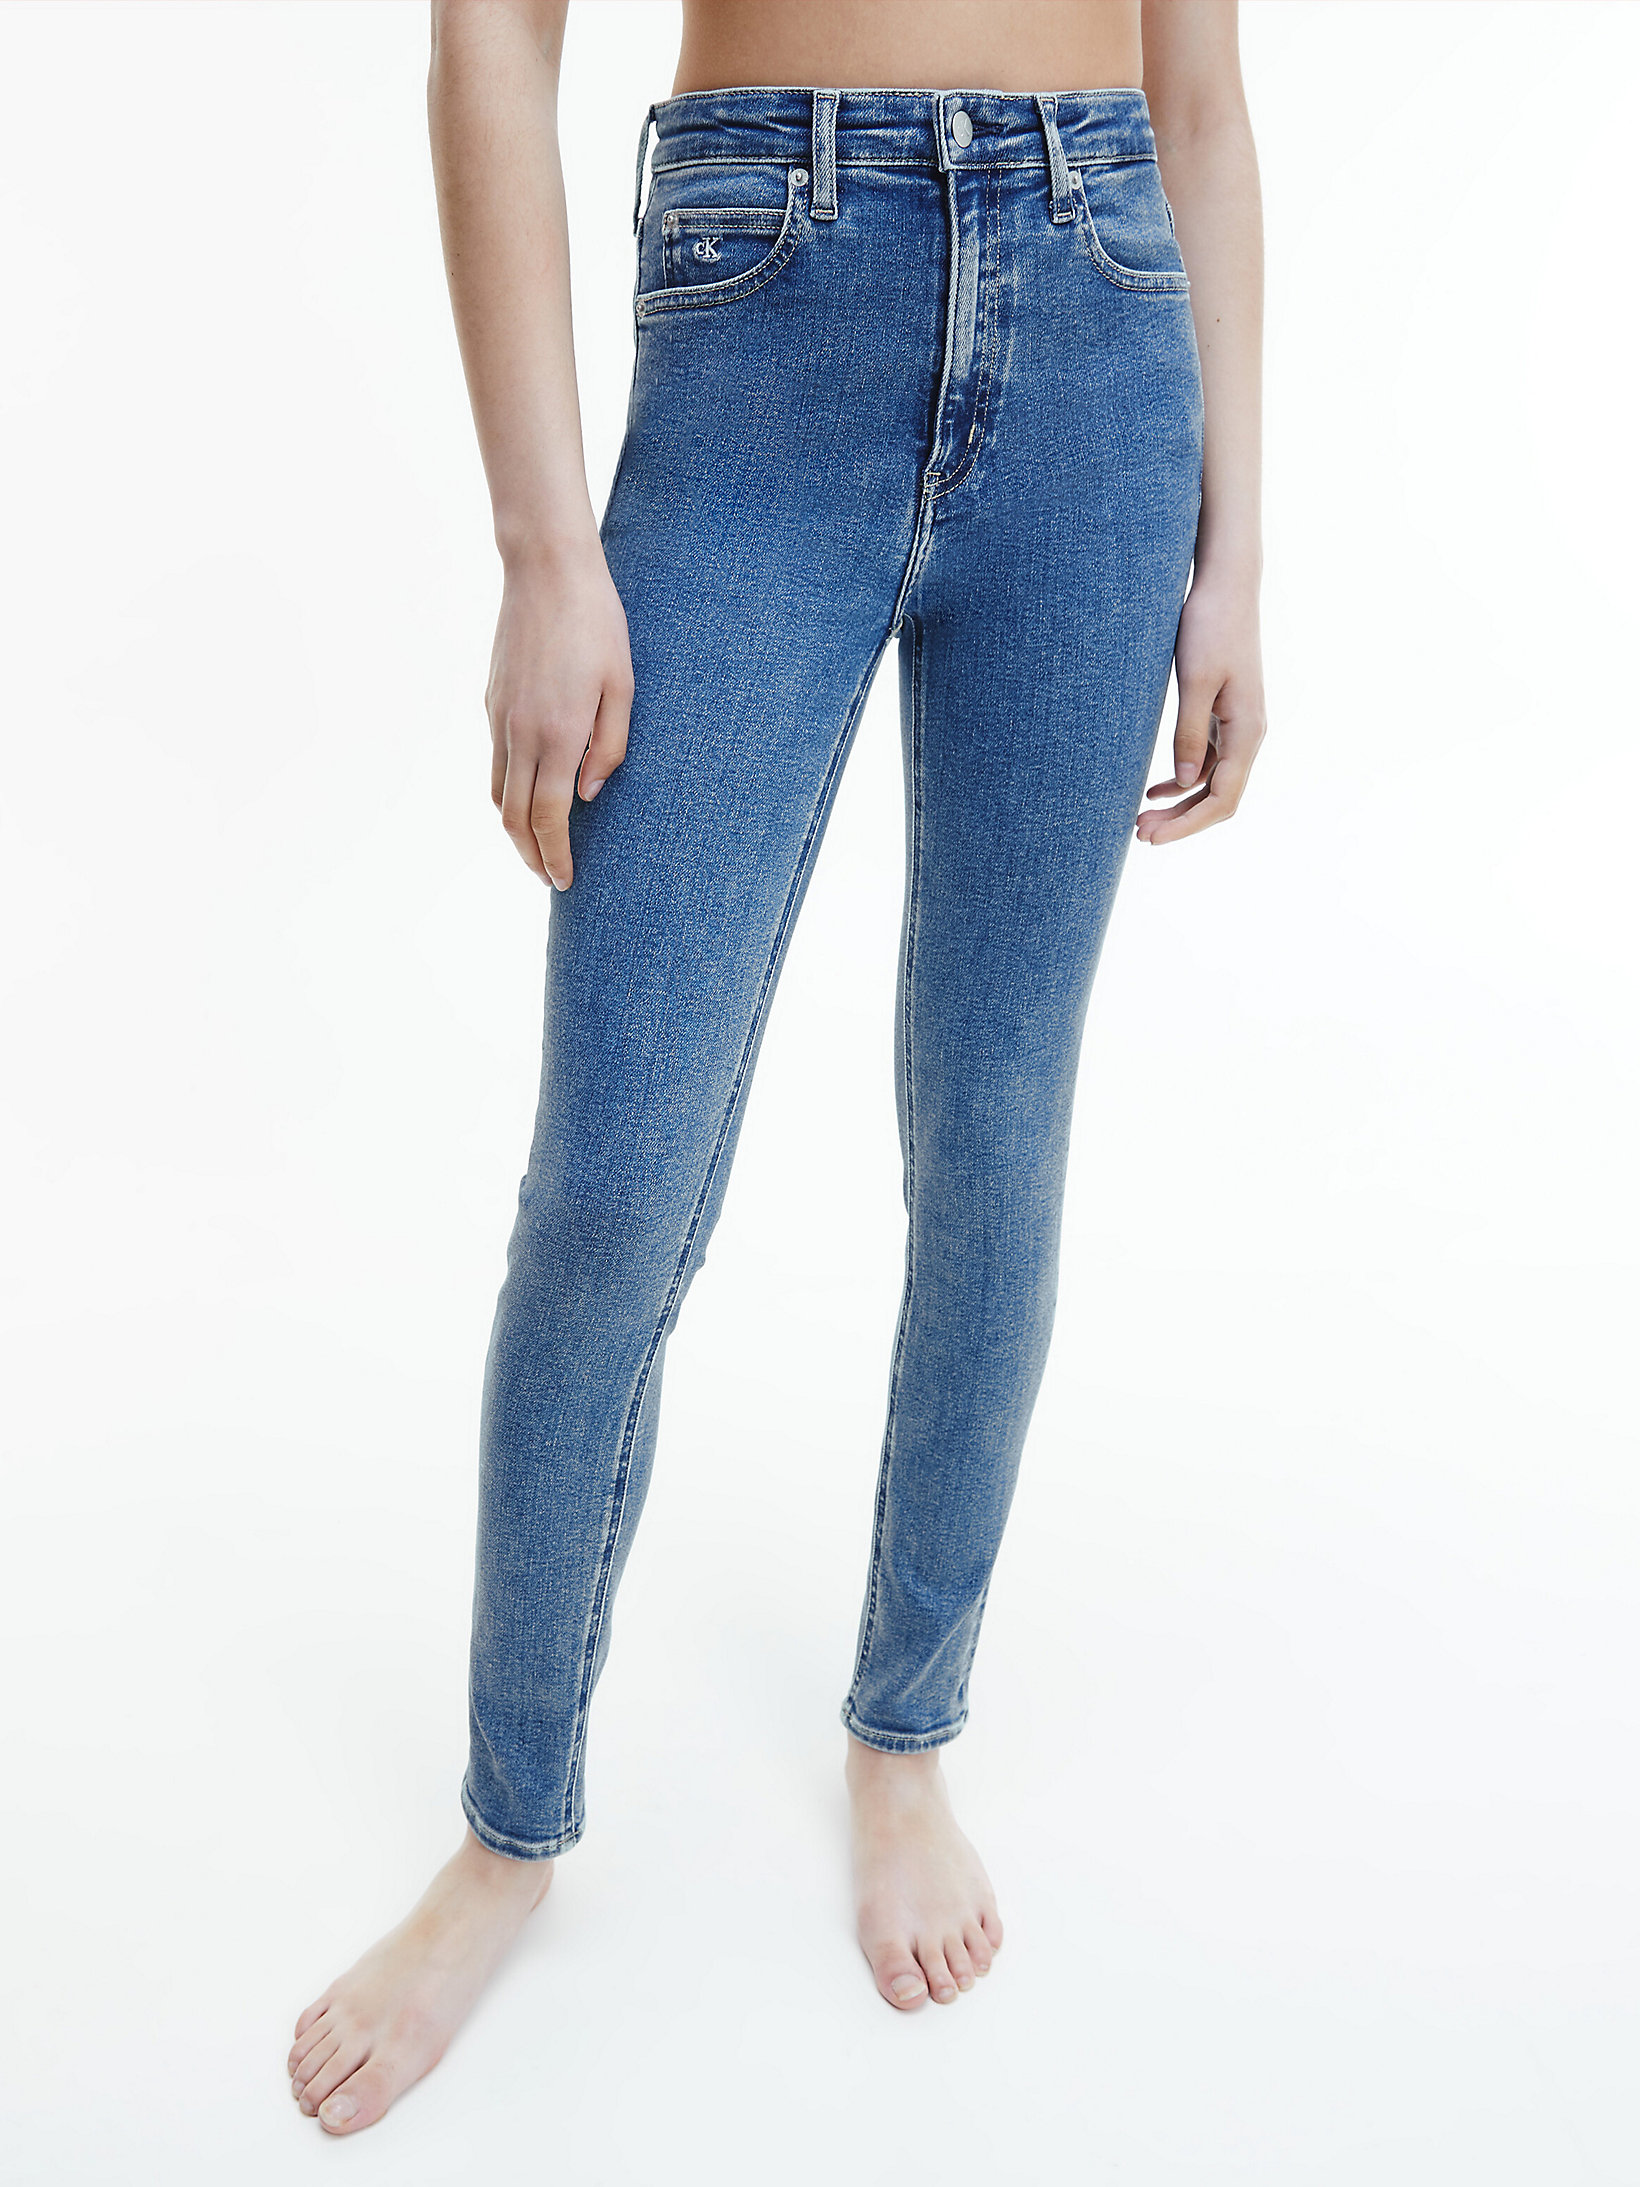 Introducir 37+ imagen calvin klein jeans high rise skinny